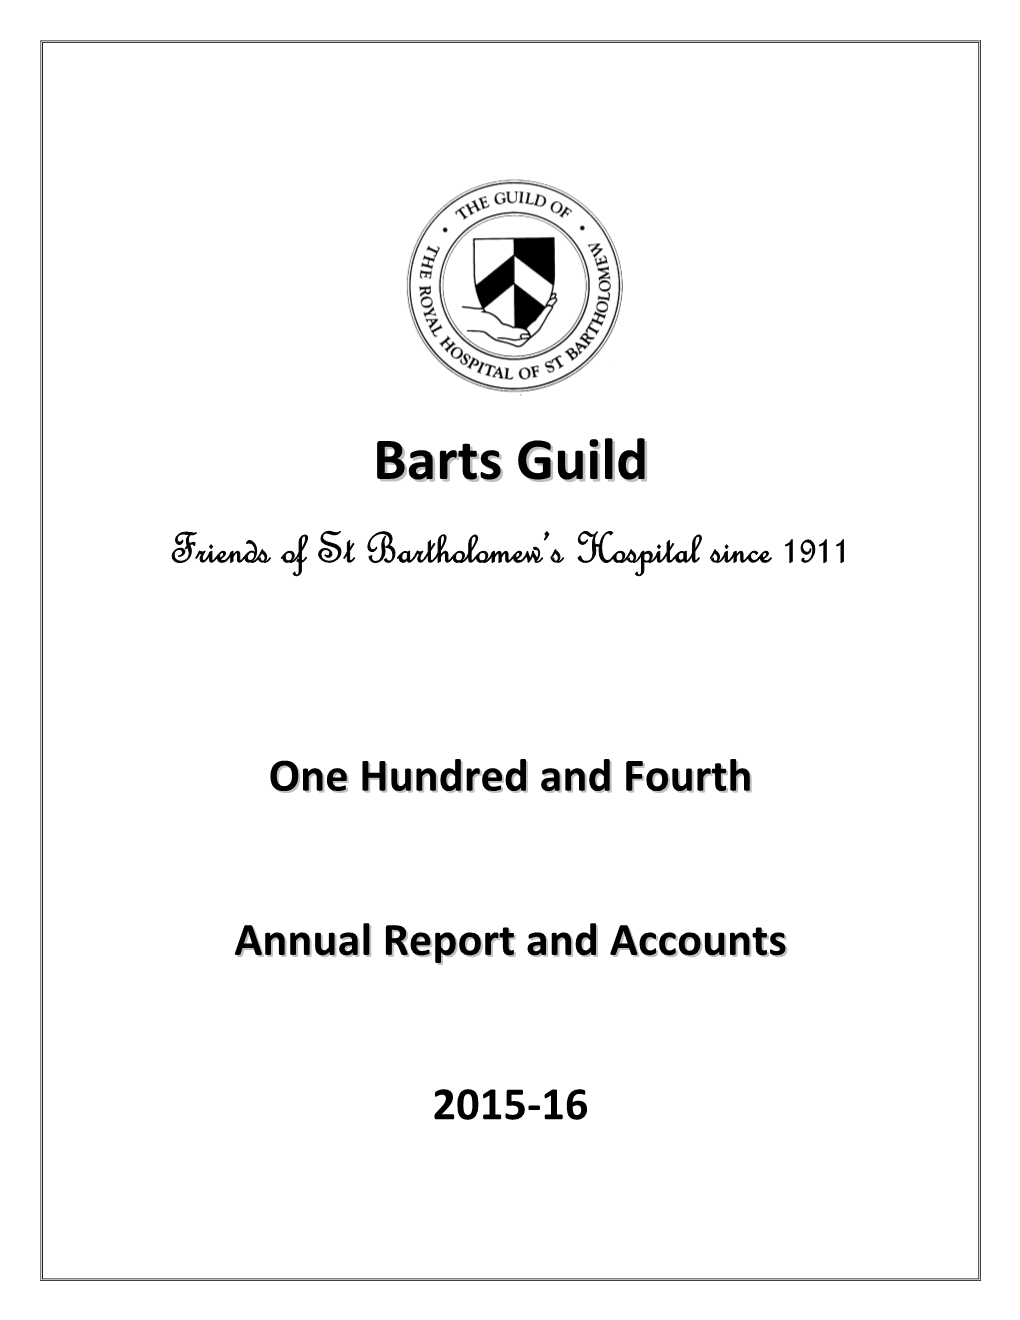 The Barts Guild Calendar 2017